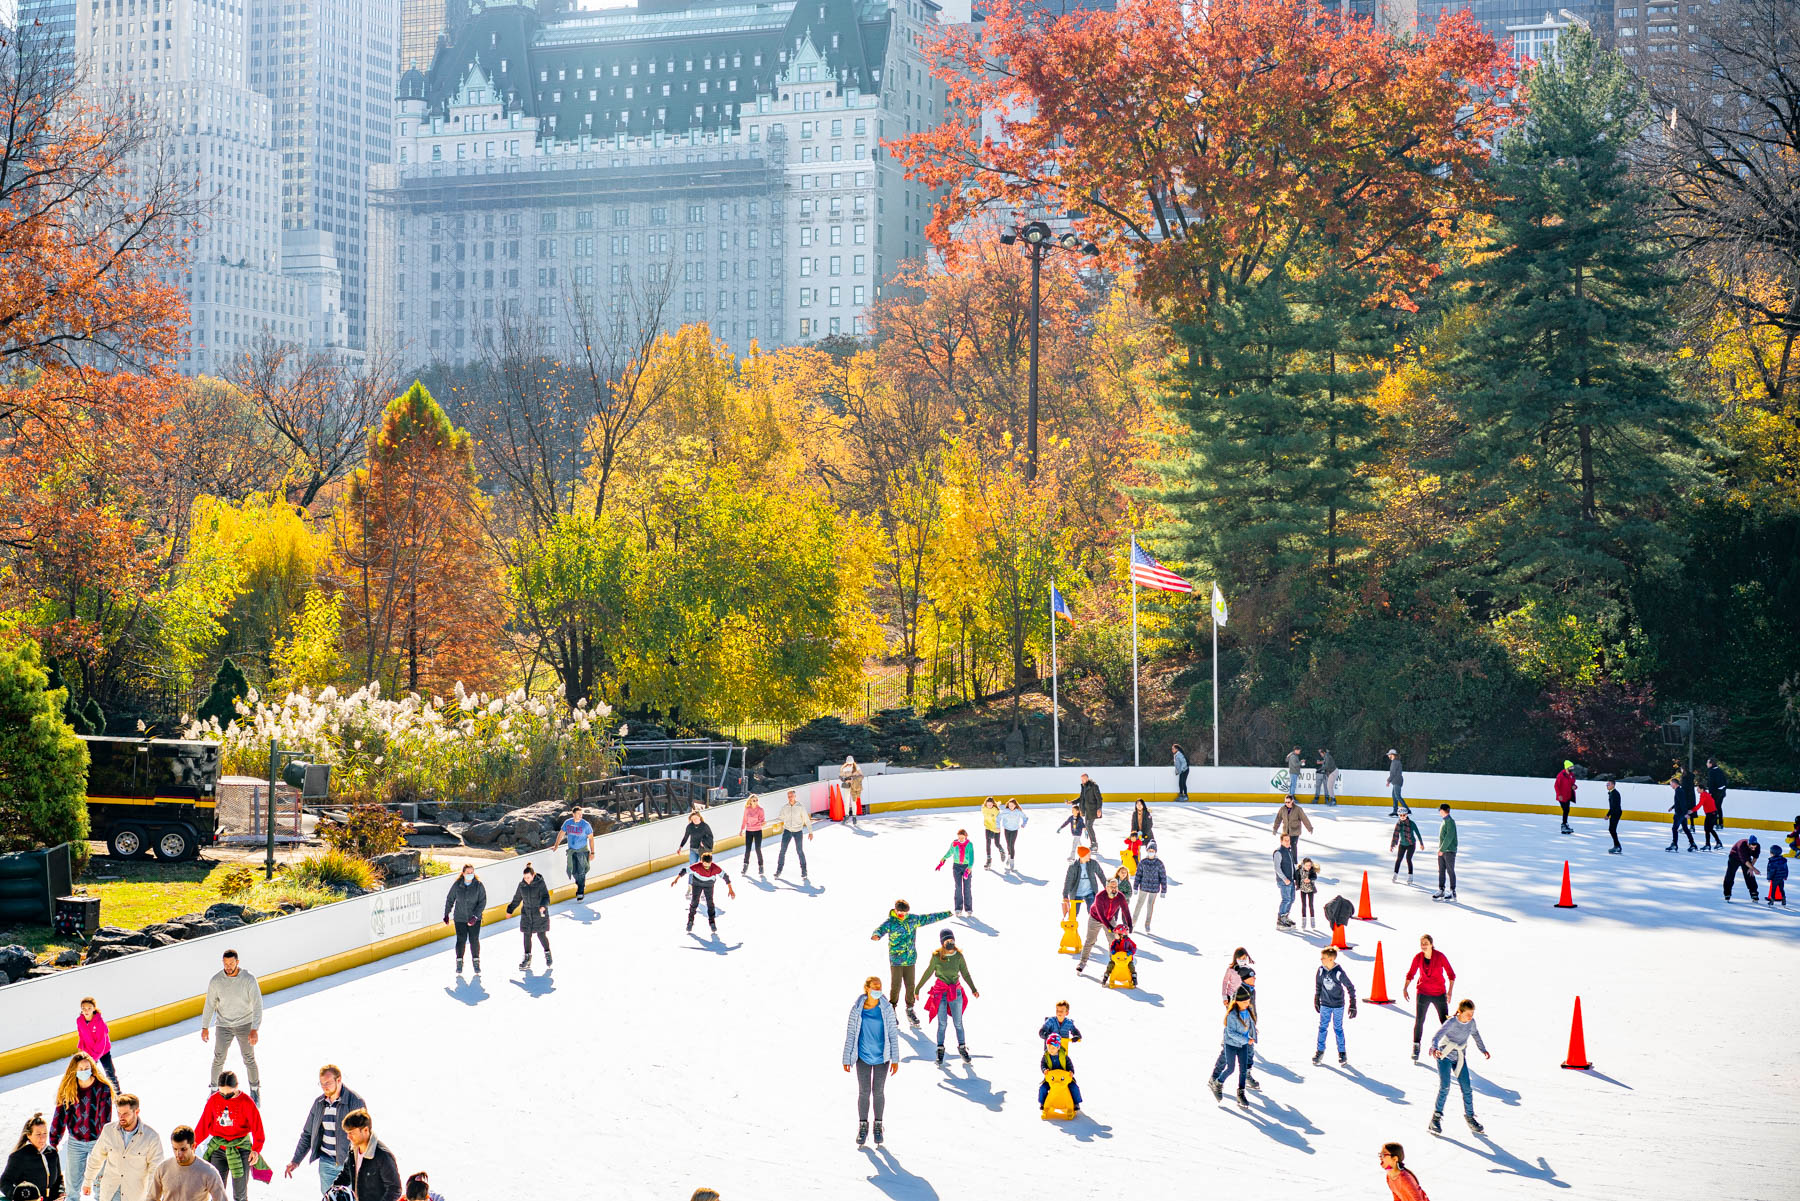 Best ice skating rinks New York City
Ice skating in Central Park